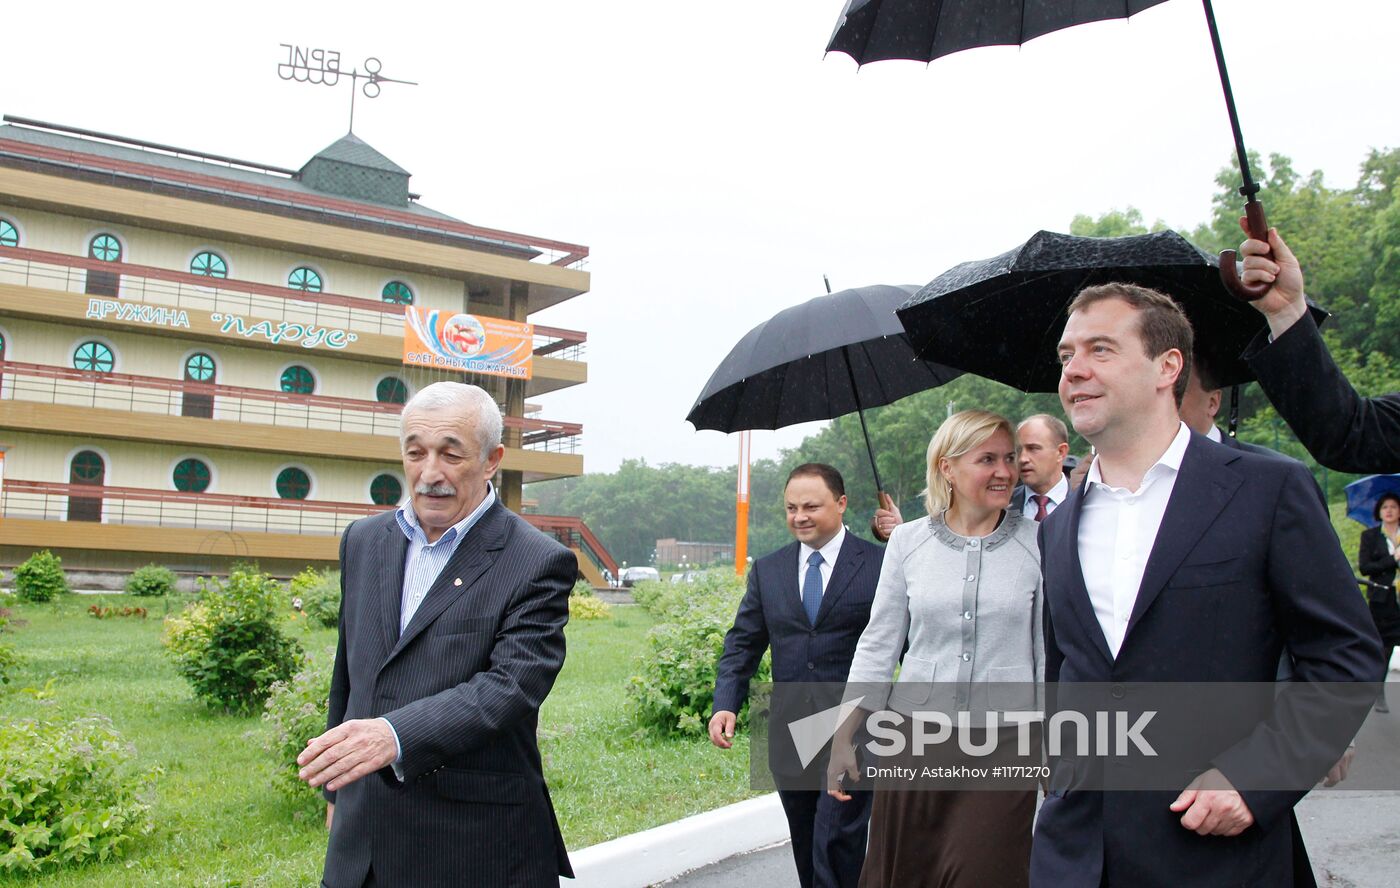 Dmitry Medvedev's working visit to Far Eastern Federal District